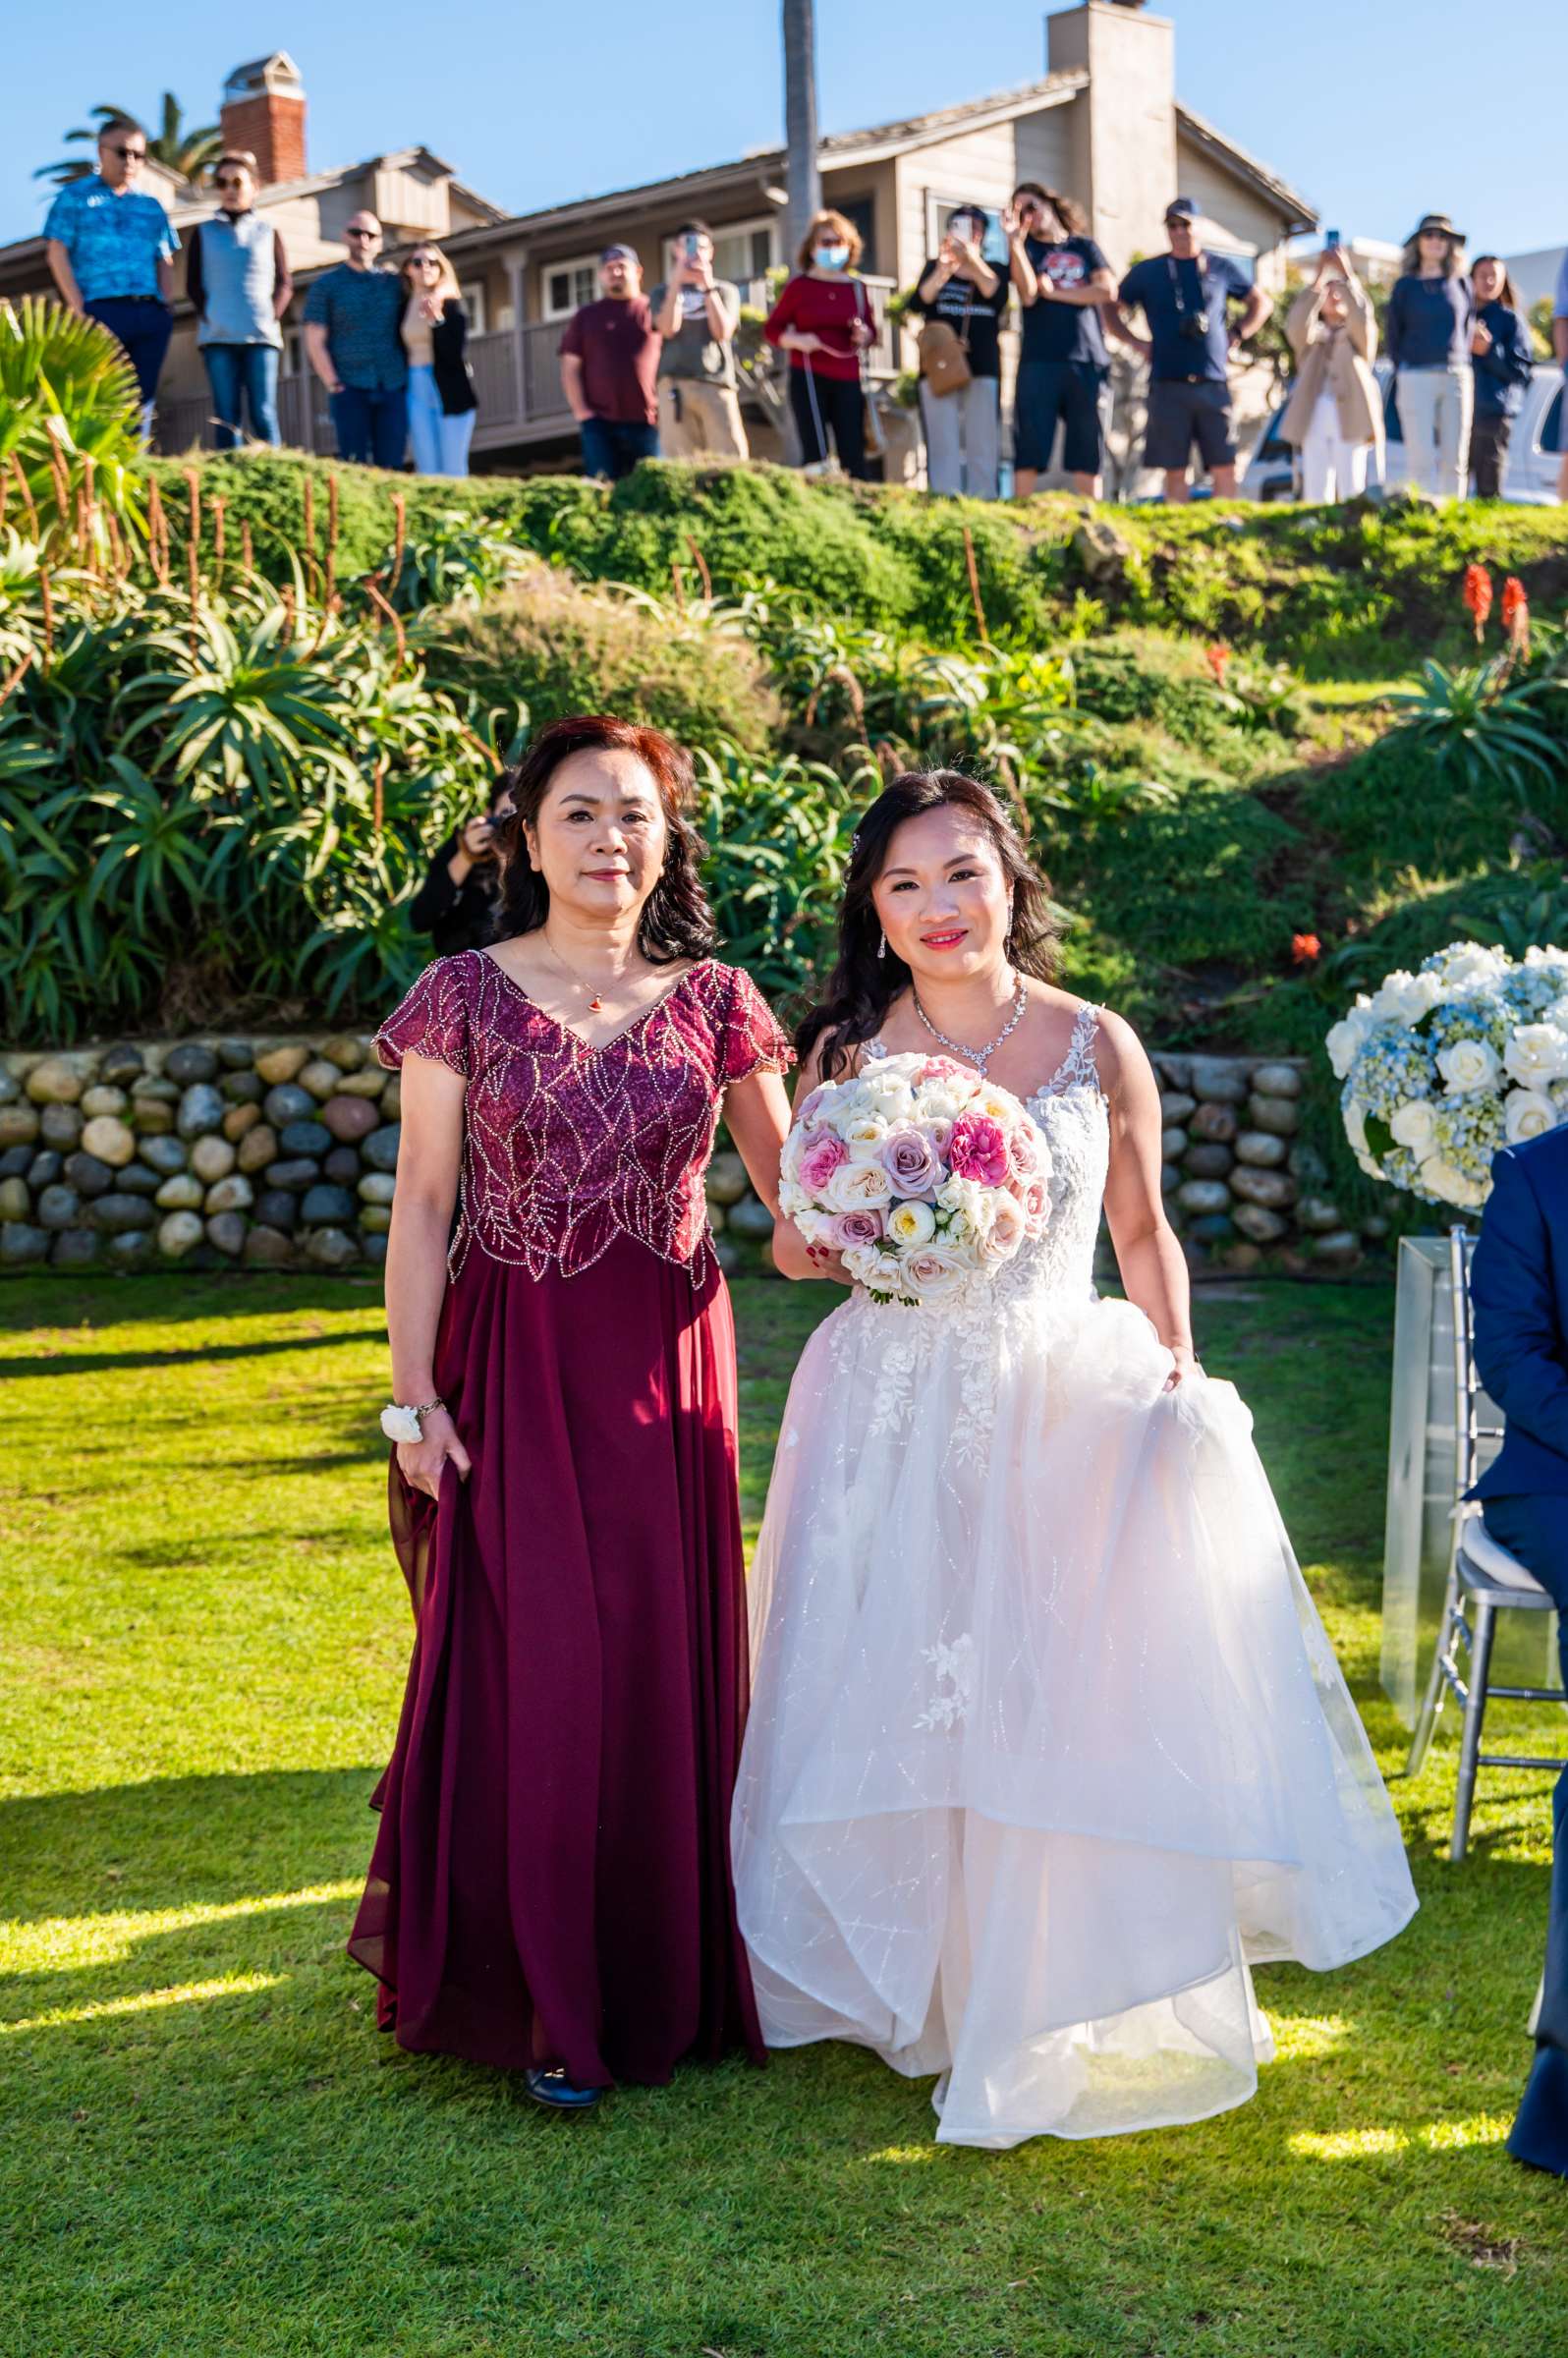 Cuvier Park-The Wedding Bowl Wedding, Yanjie and Tony Wedding Photo #17 by True Photography